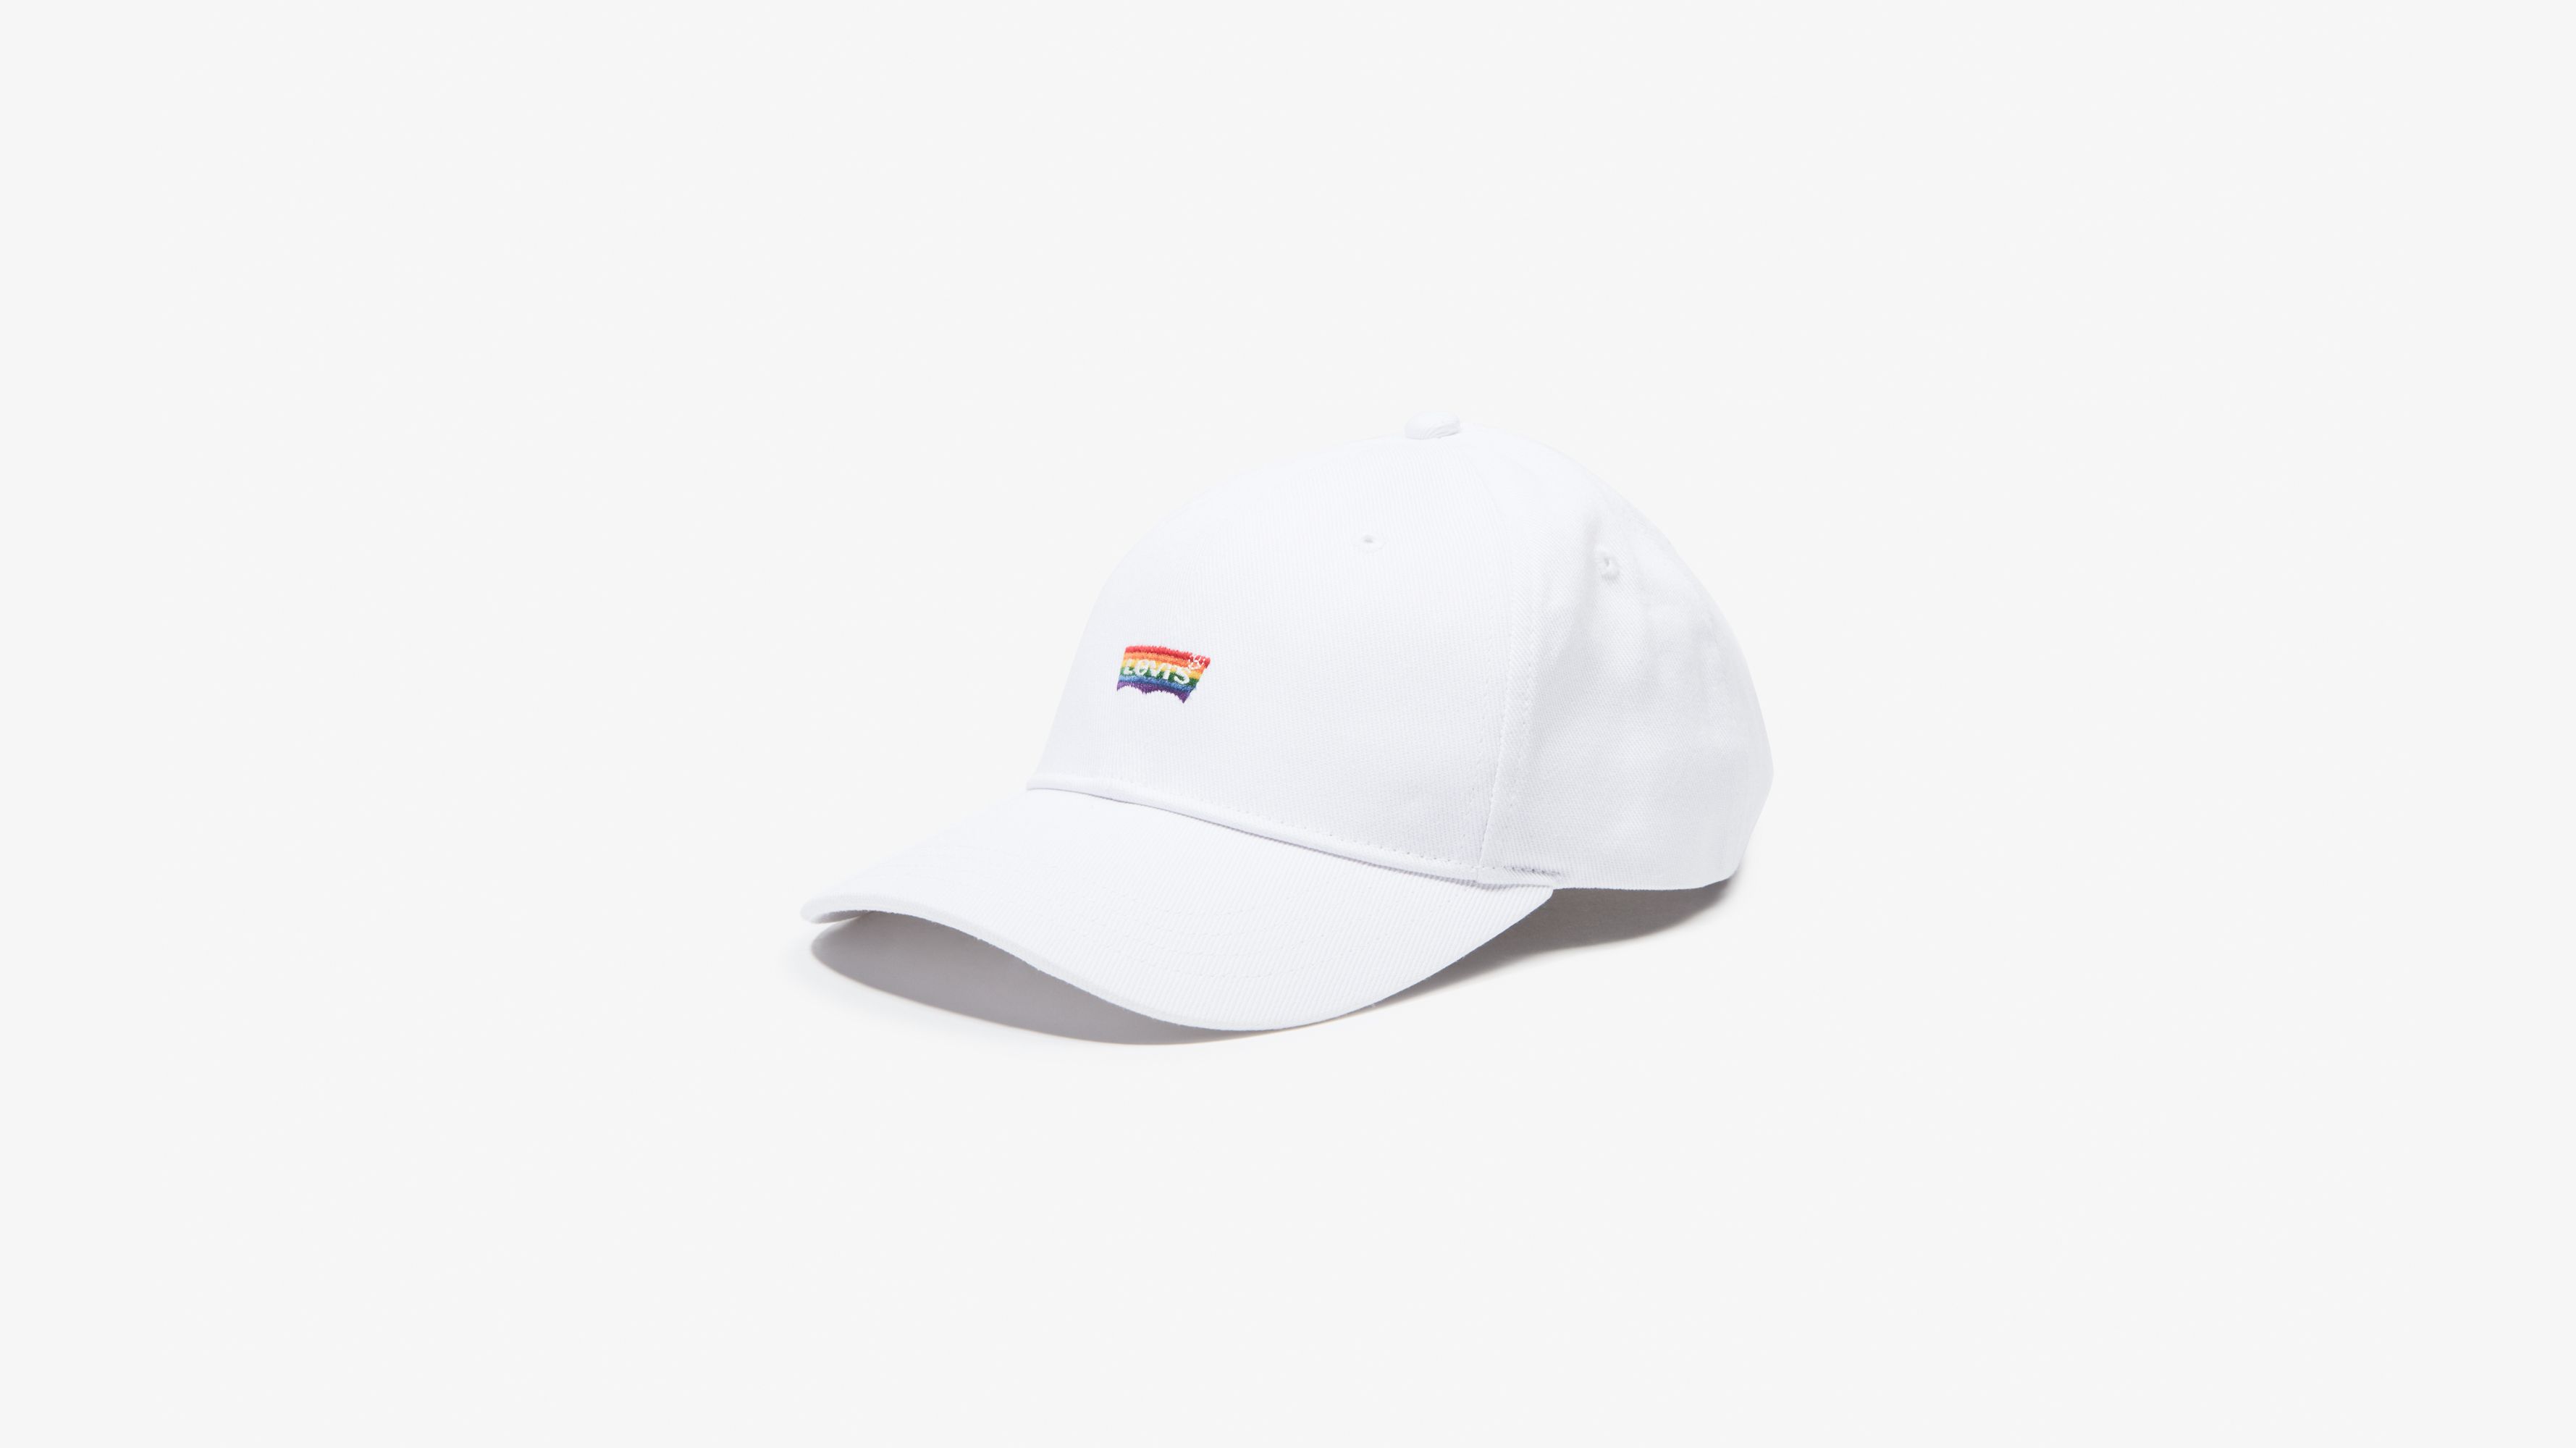 white levis hat